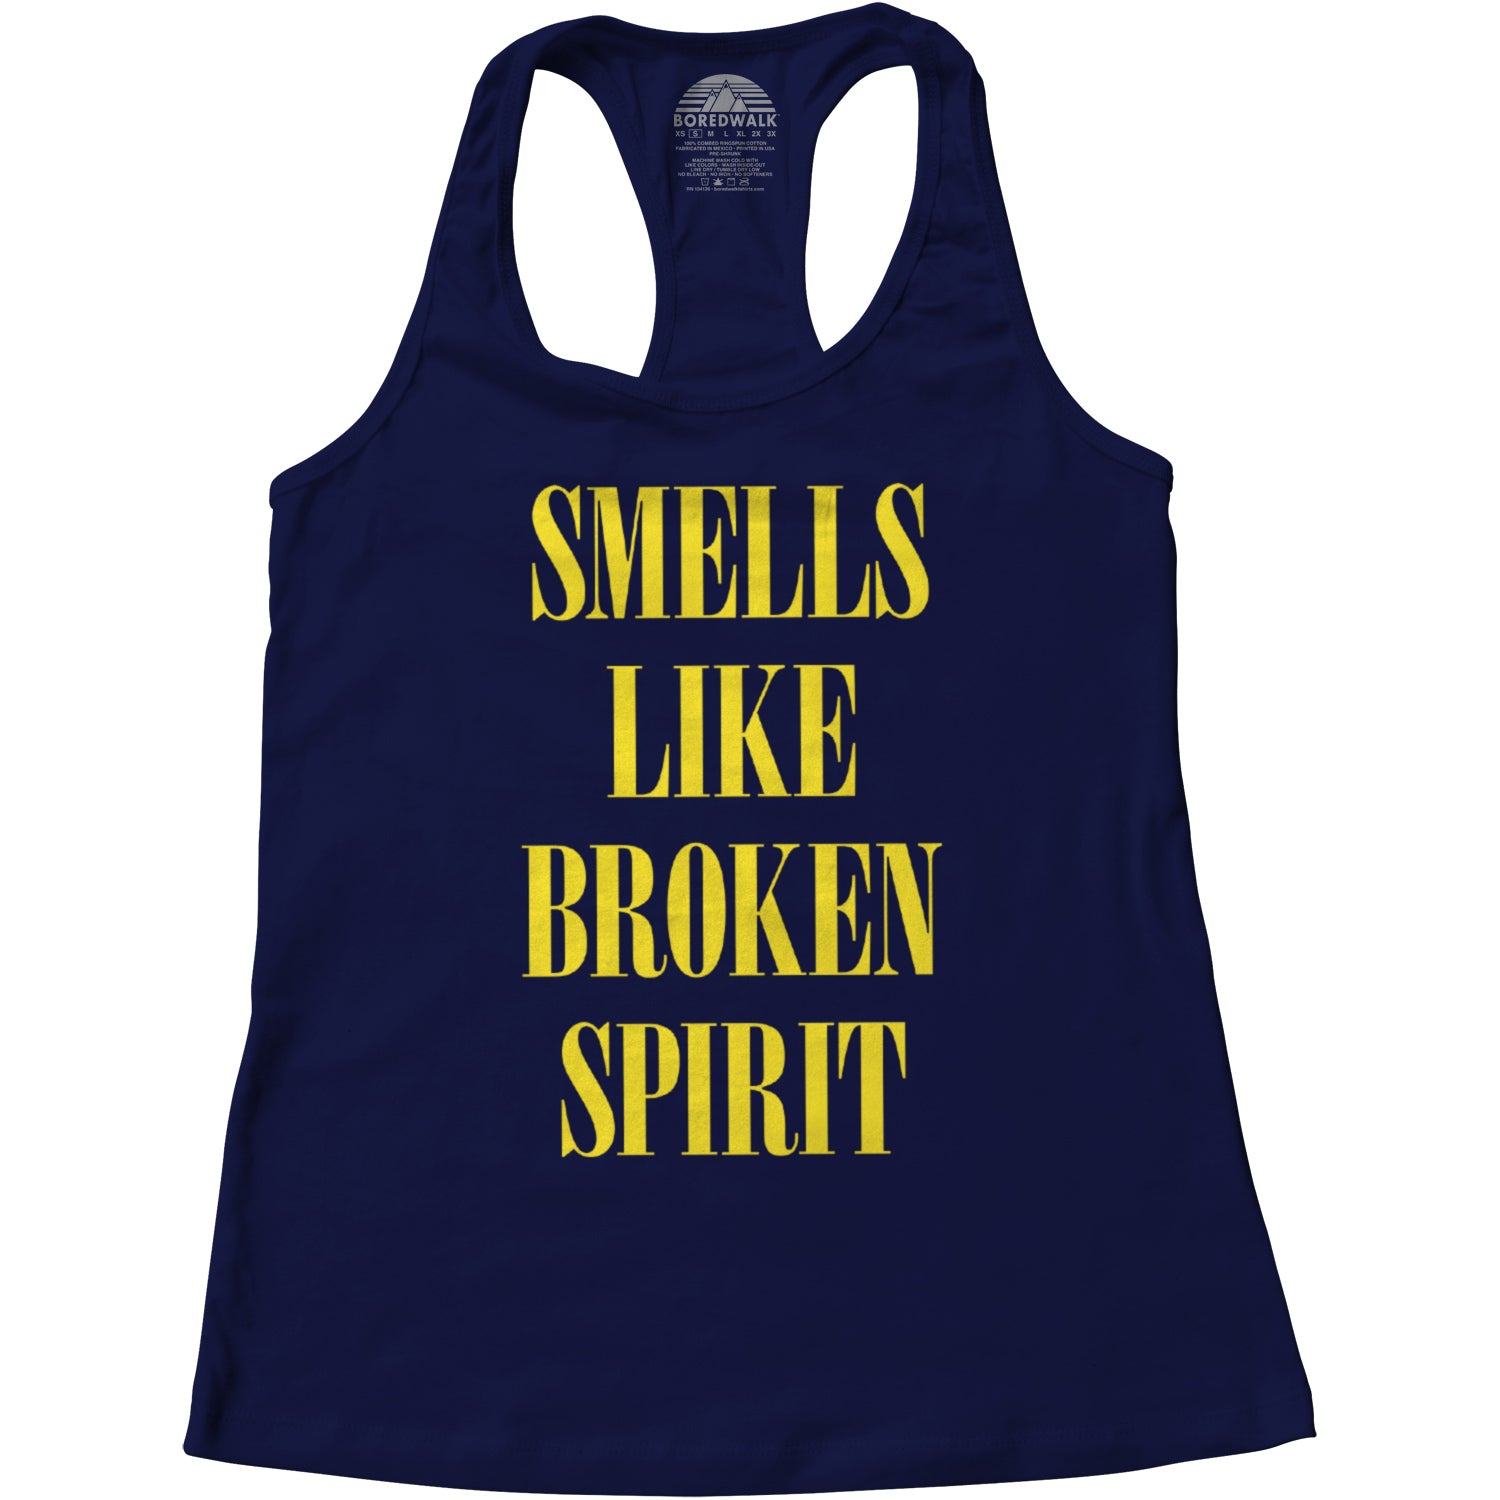 Women's Smells Like Broken Spirit Racerback Tank Top